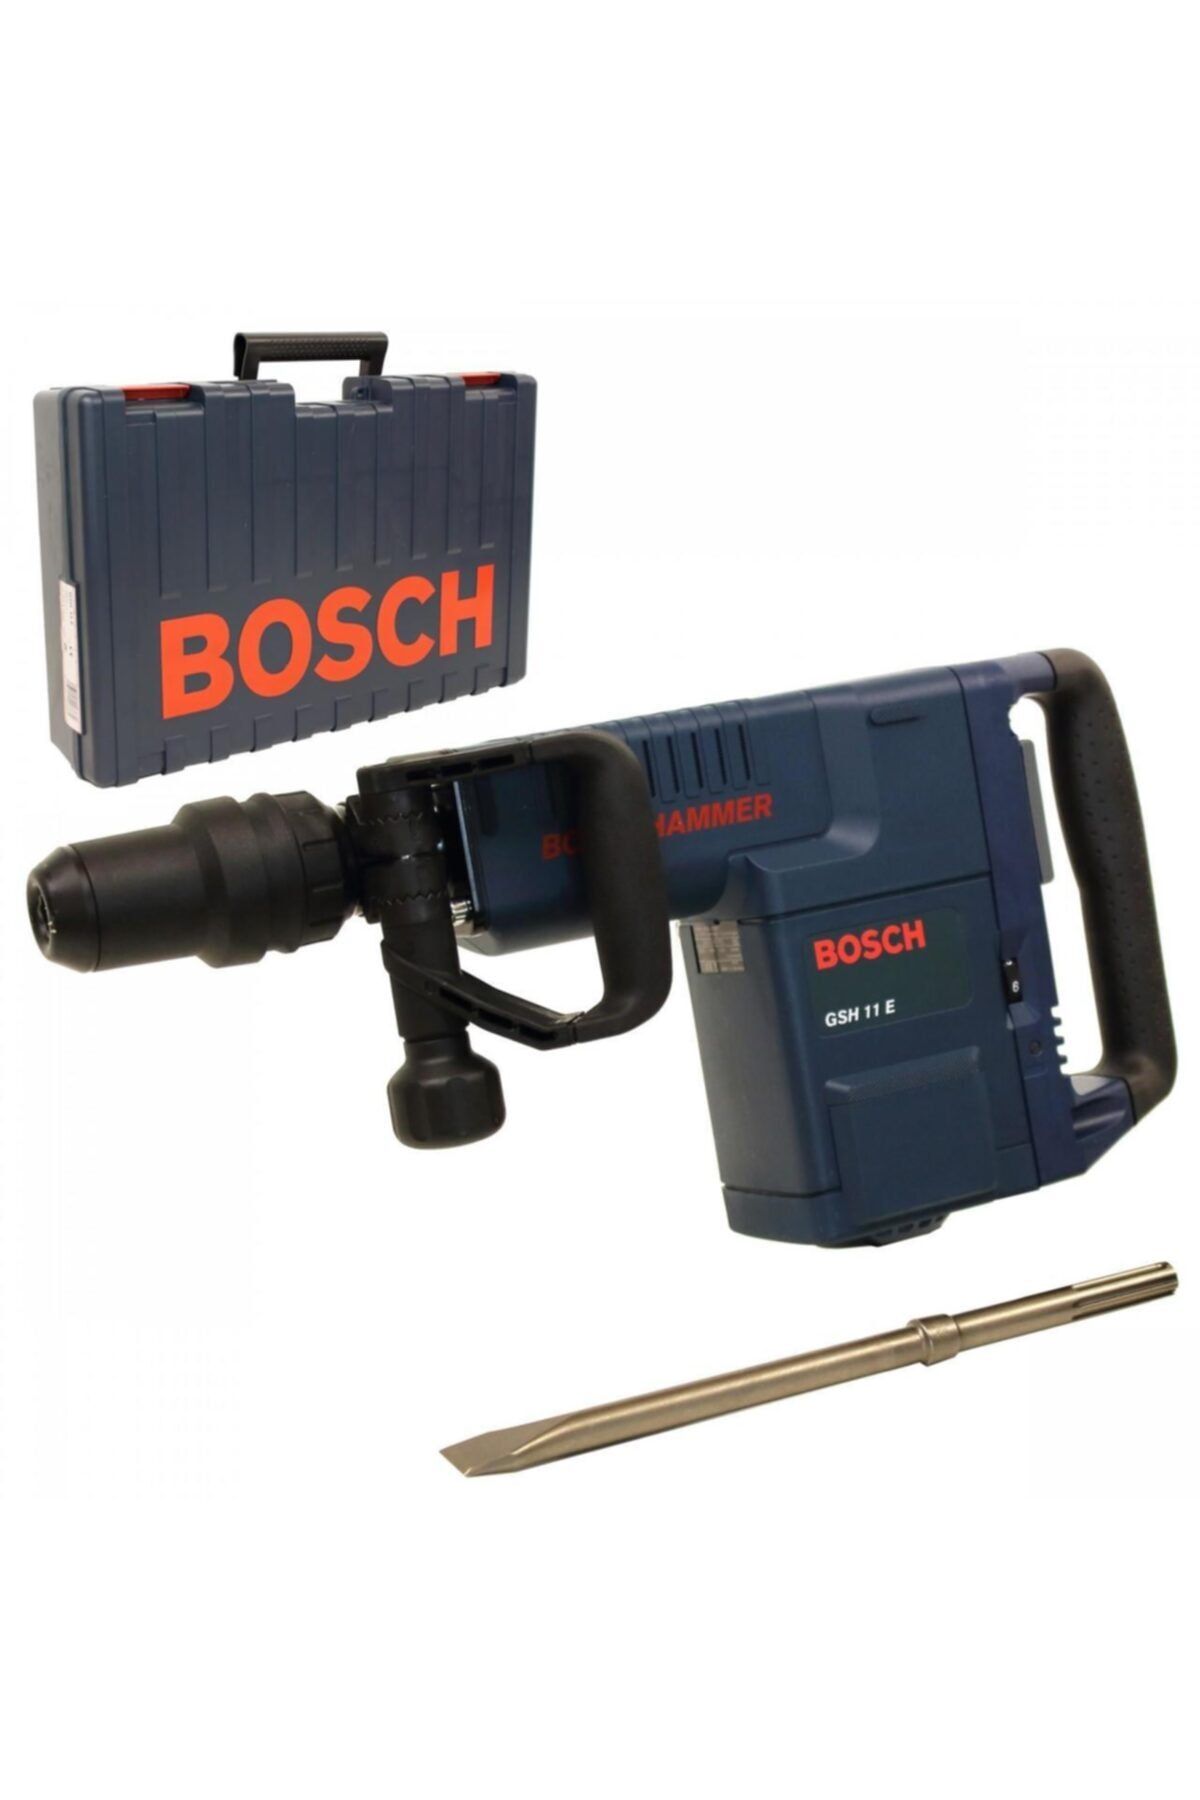 Bosch Max Kırıcı 1500 Watt Çantalı 0 611 316 703 Gsh 11 E Sds